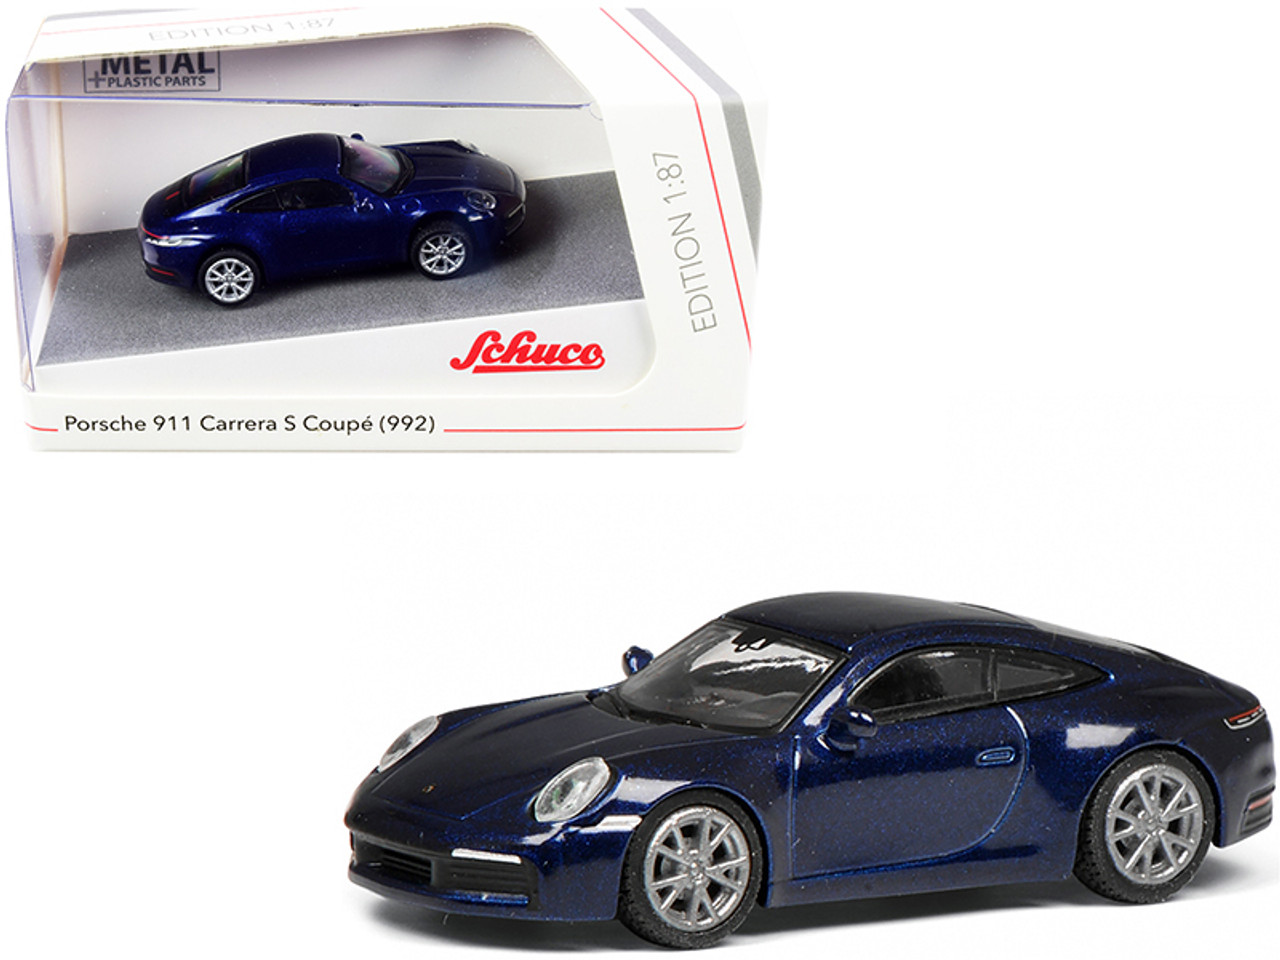 Porsche 911 (992) Carrera S Coupe Dark Blue Metallic 1/87 (HO) Diecast Model Car by Schuco